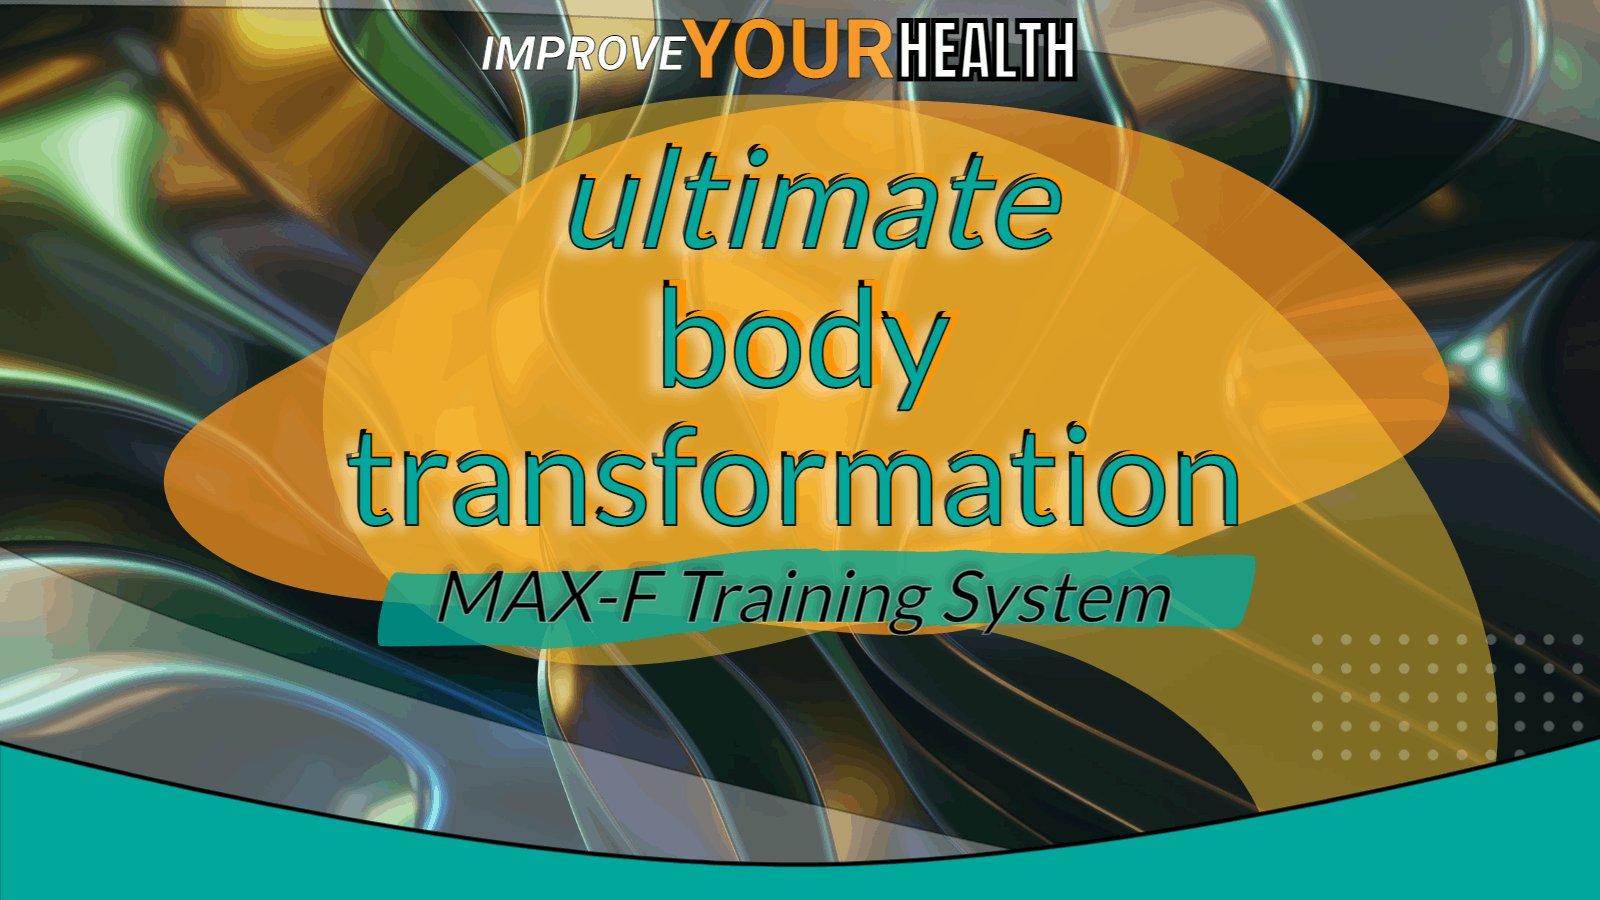 Ultmate Body Transformation